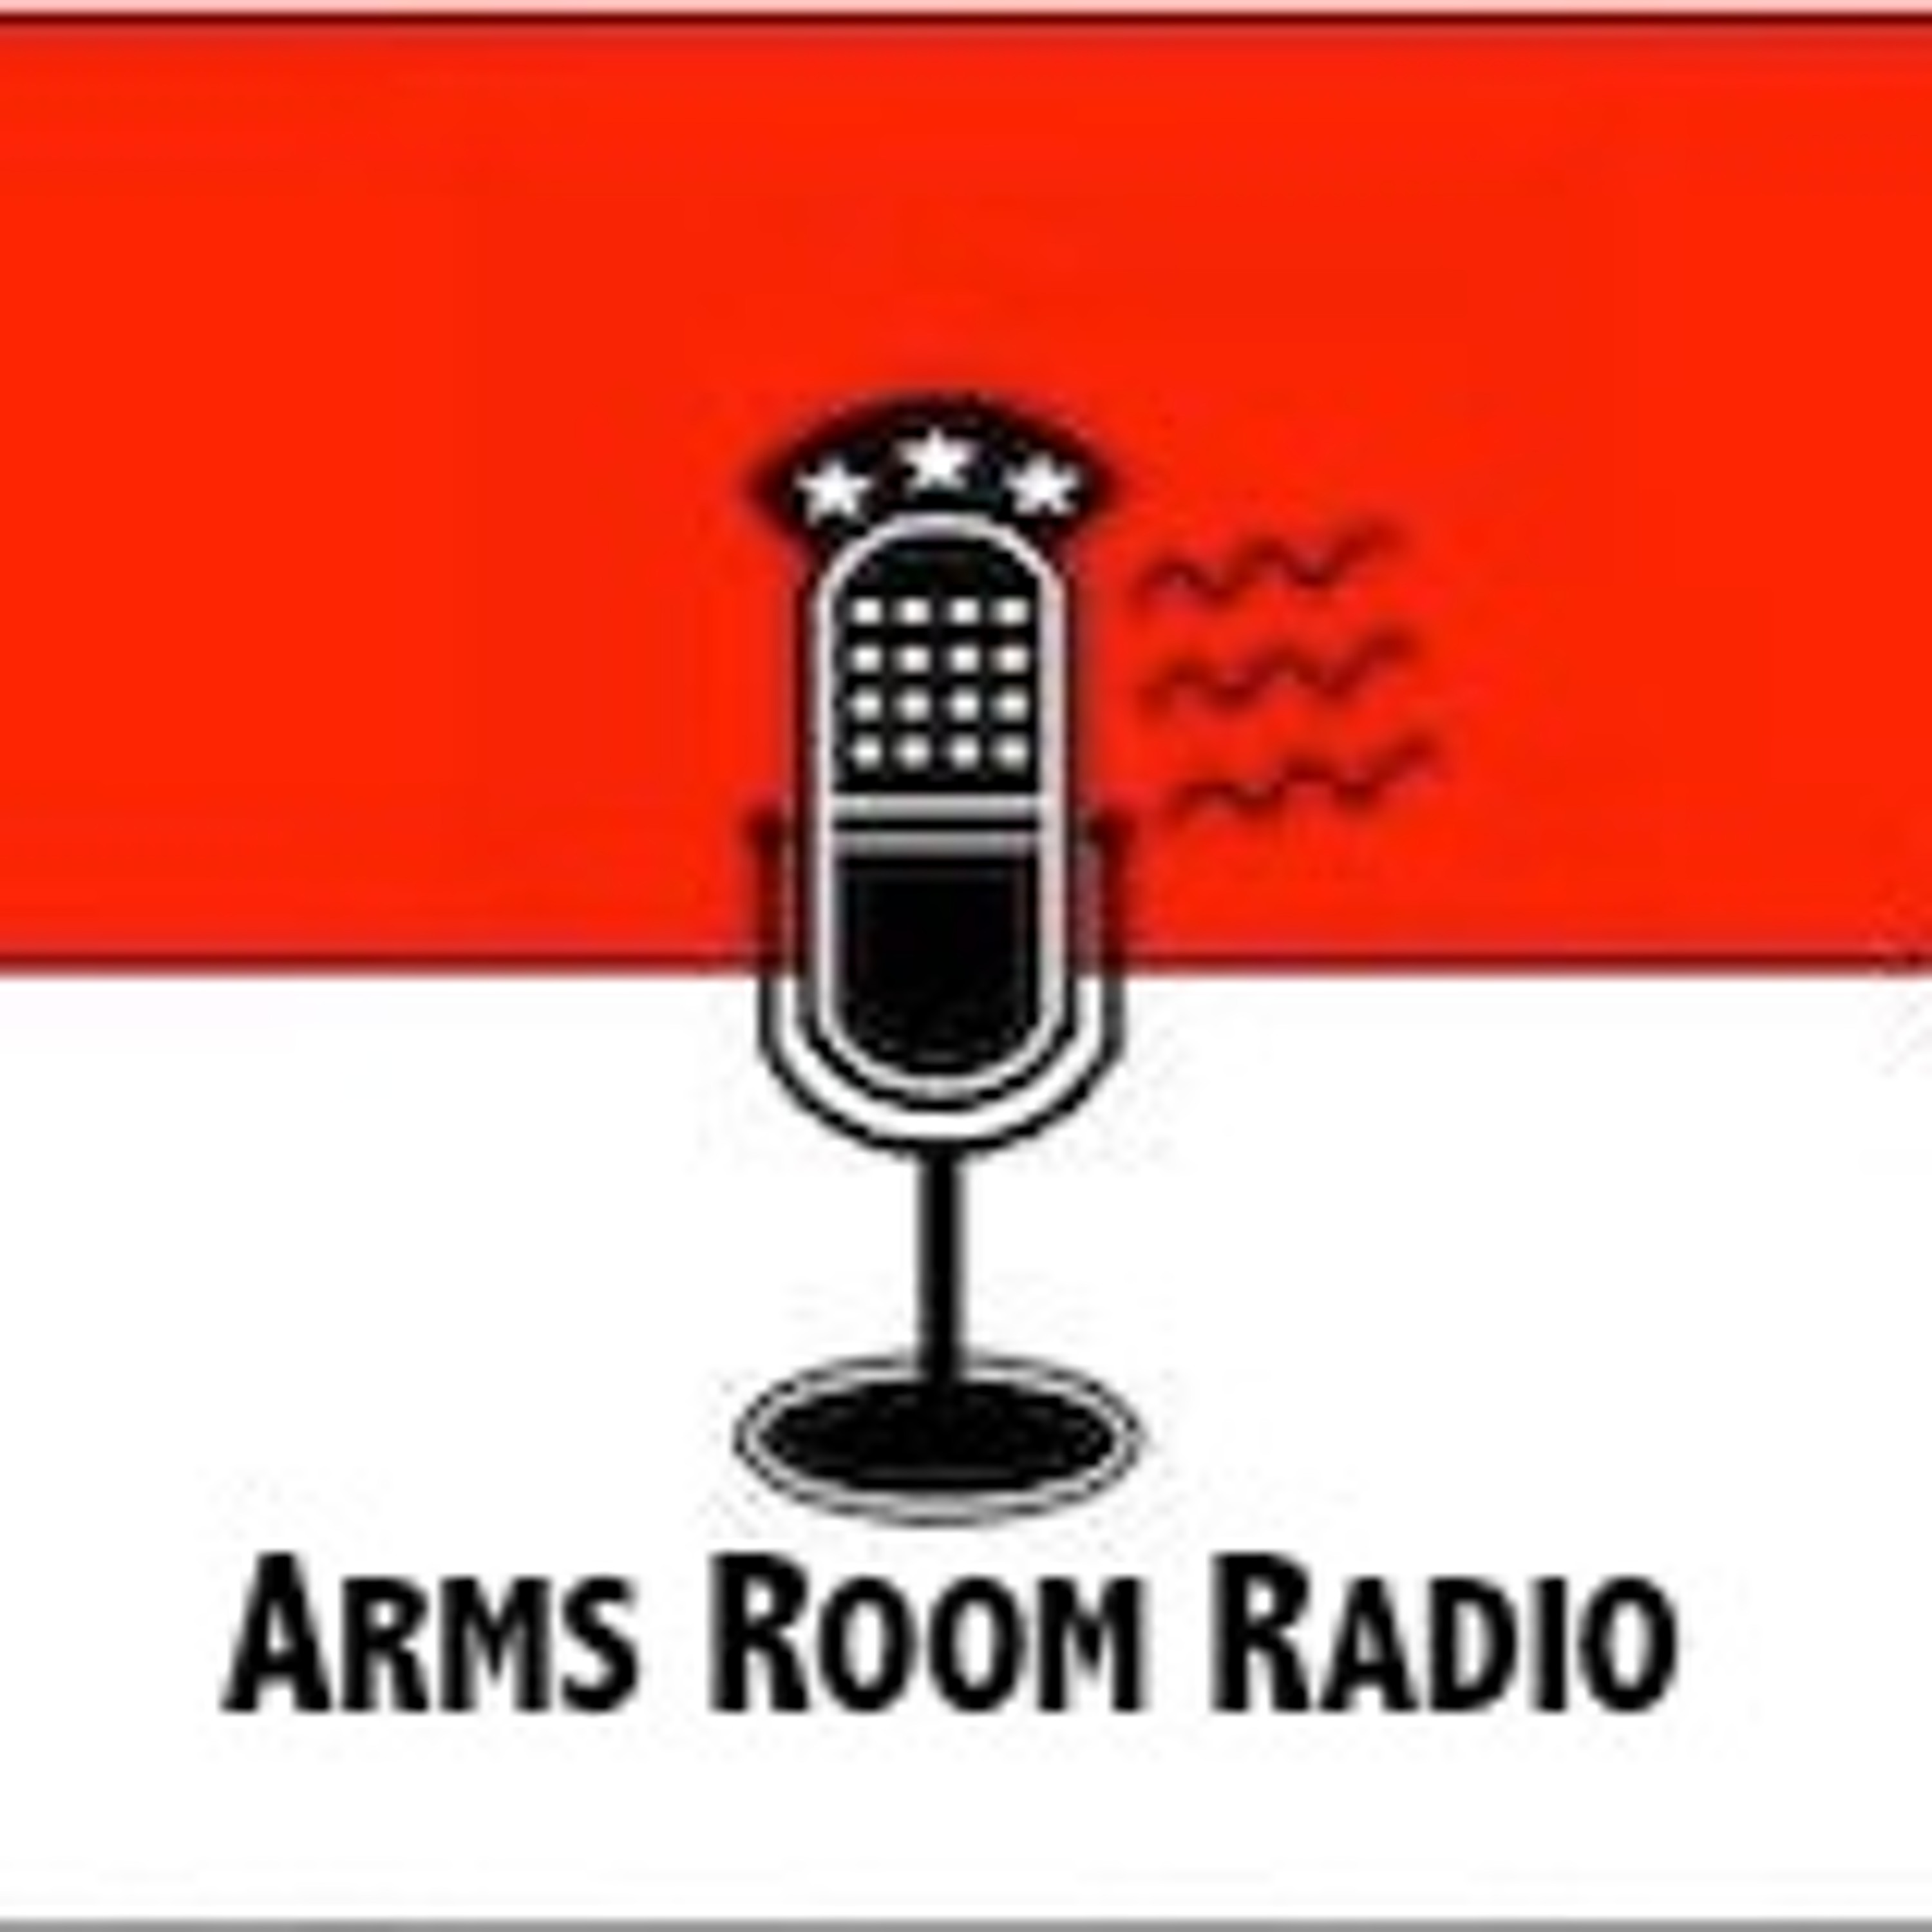 ArmsRoomRadio 03.30.19 guest Atty Eric Friday, 1911 birthday